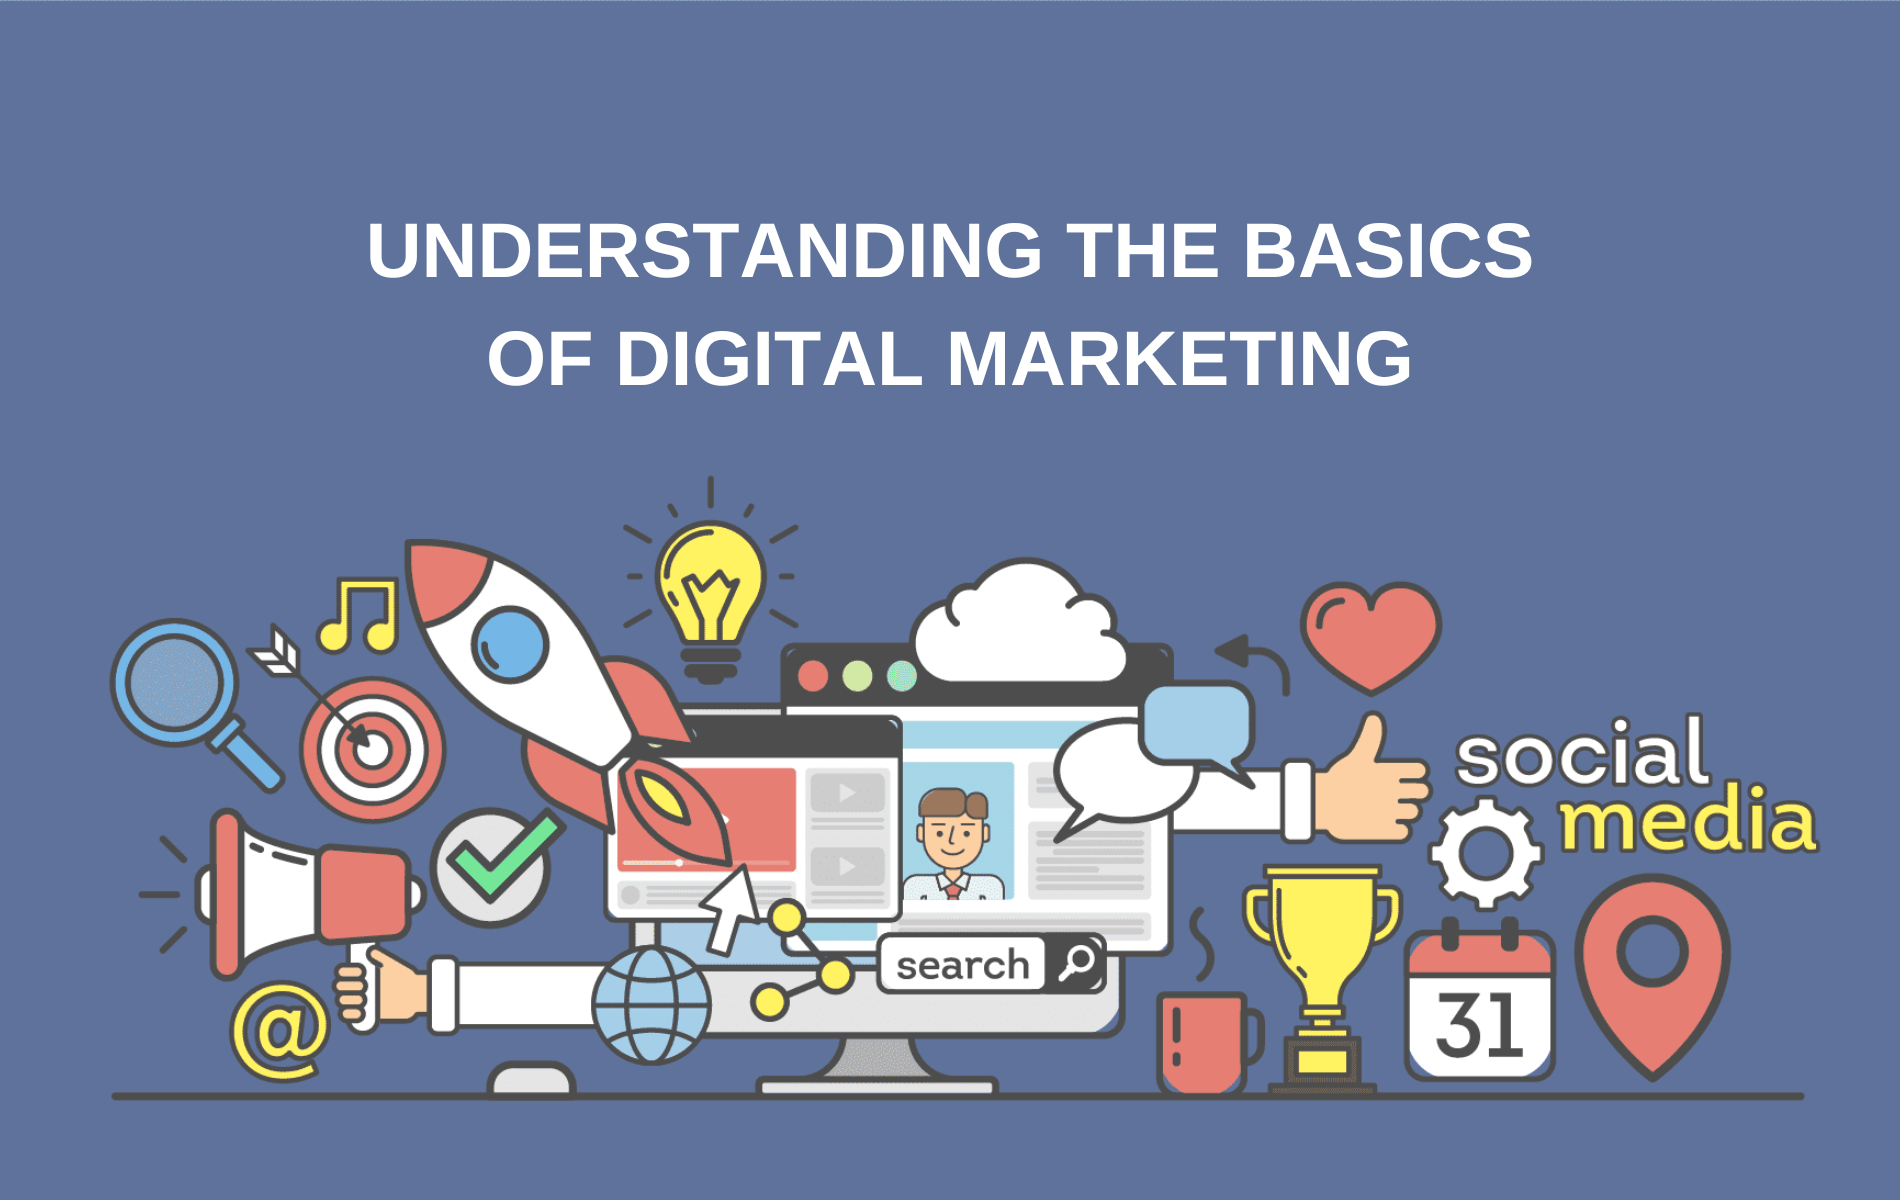 Basics of Digital Marketing